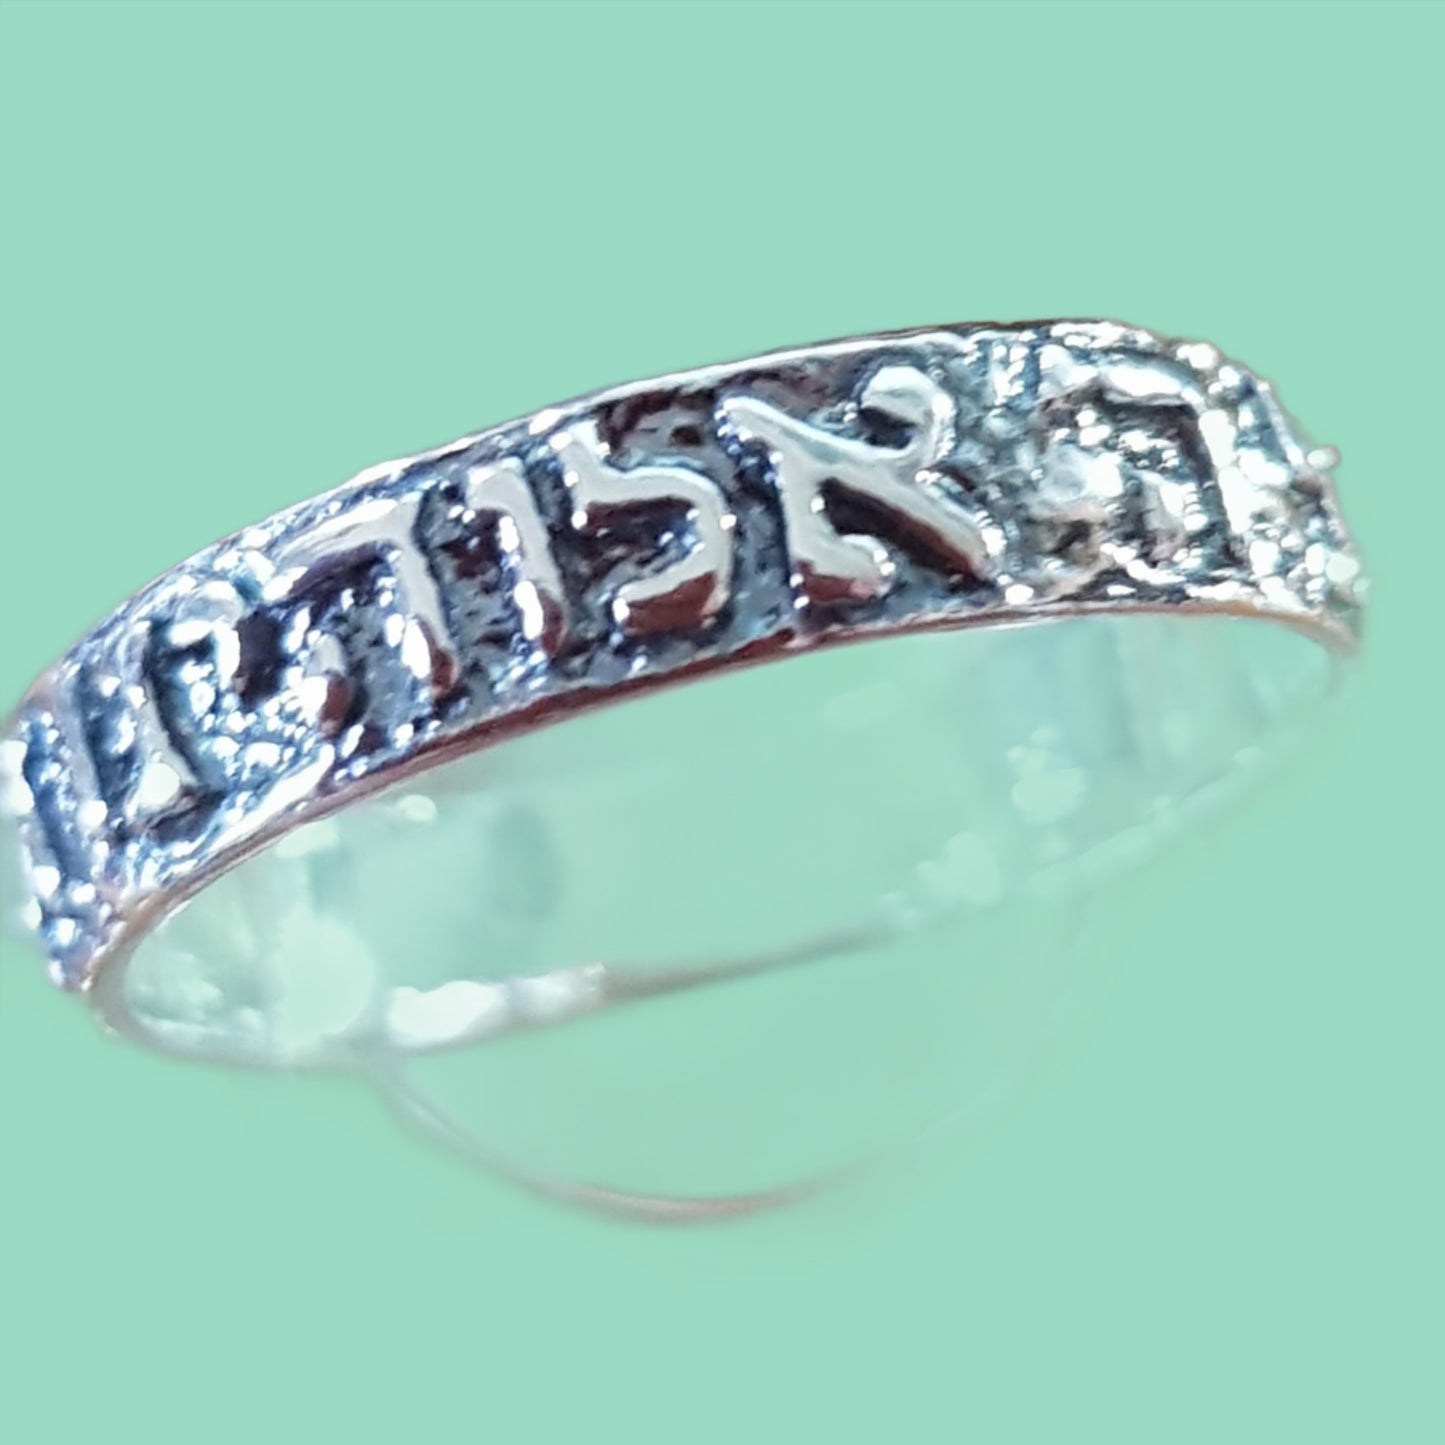 Bluenoemi rings Jewish Ring Sterling SilverJewish Judaica Shema Israel Ring